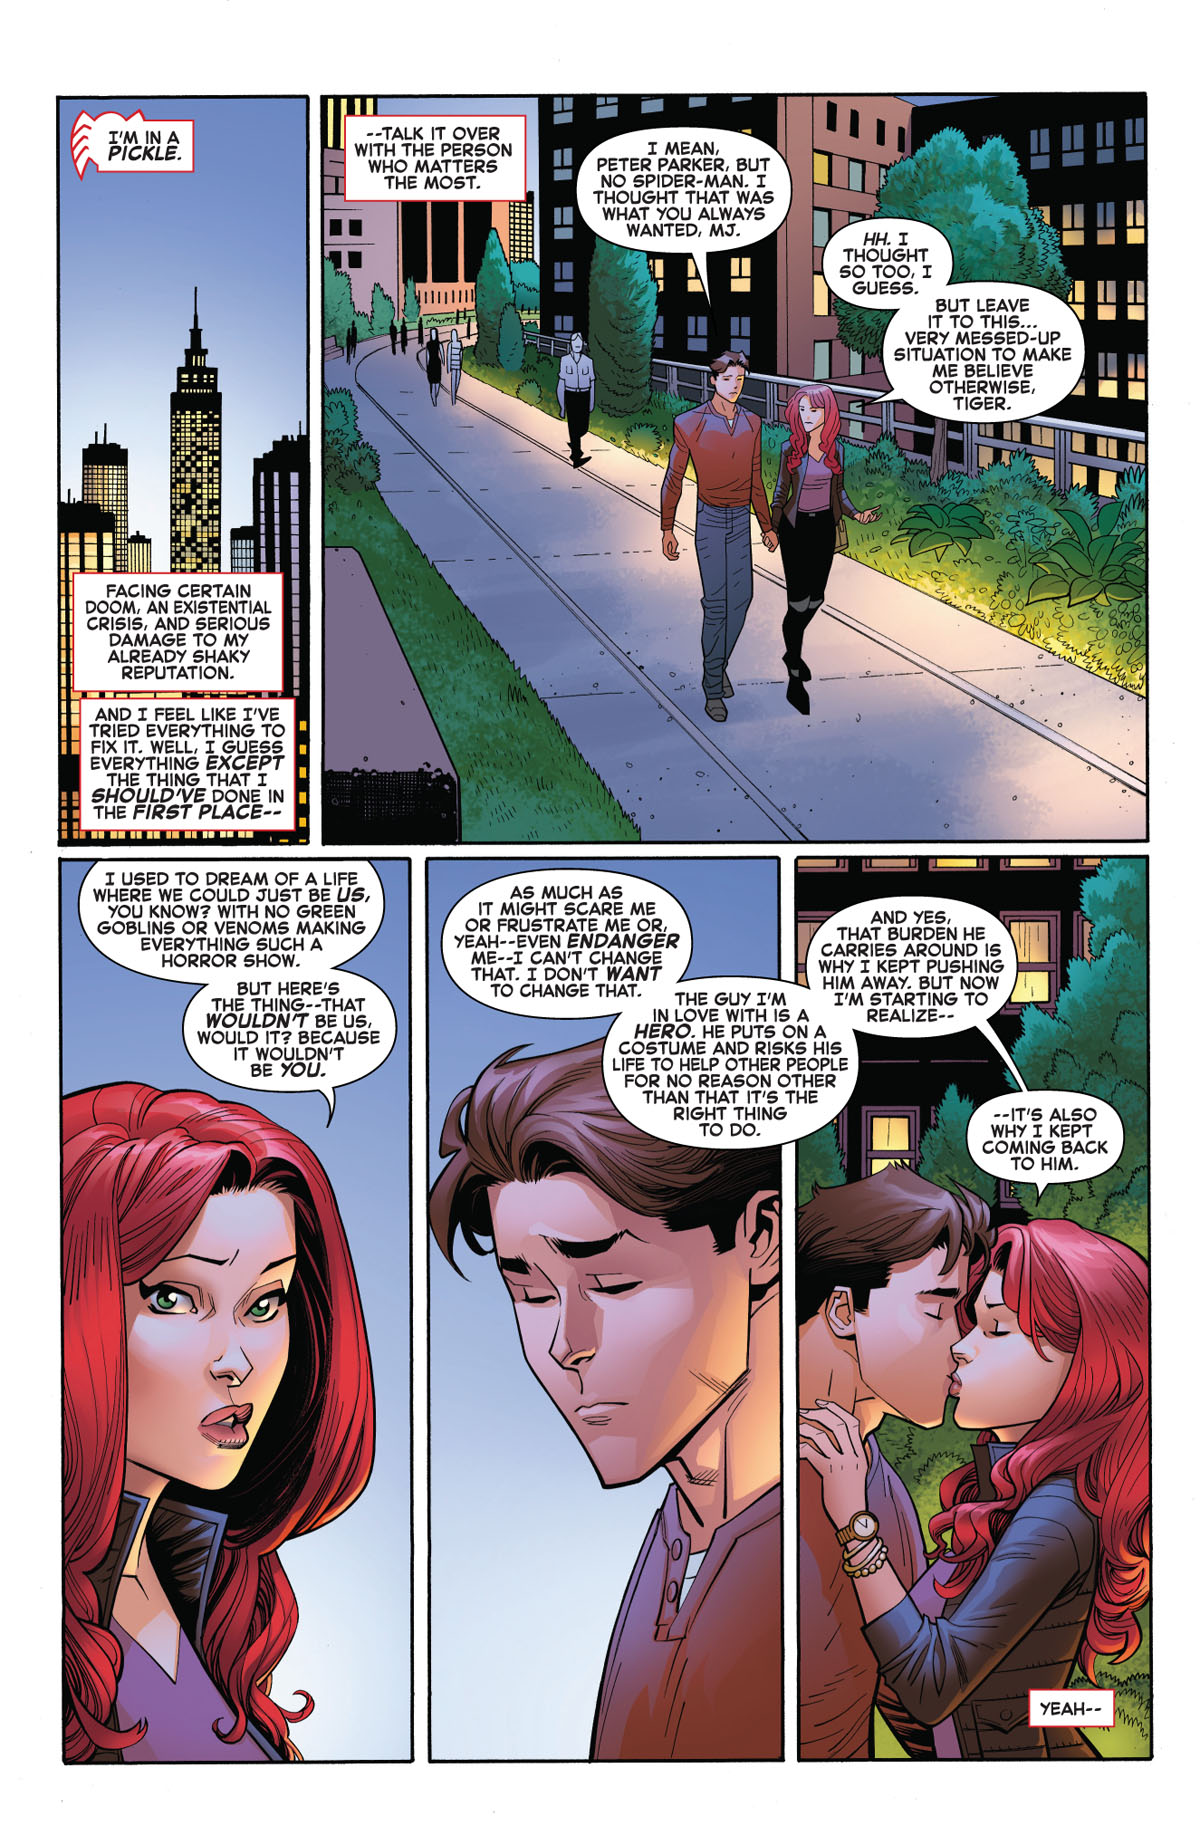 Amazing Spider-Man #5 page 1